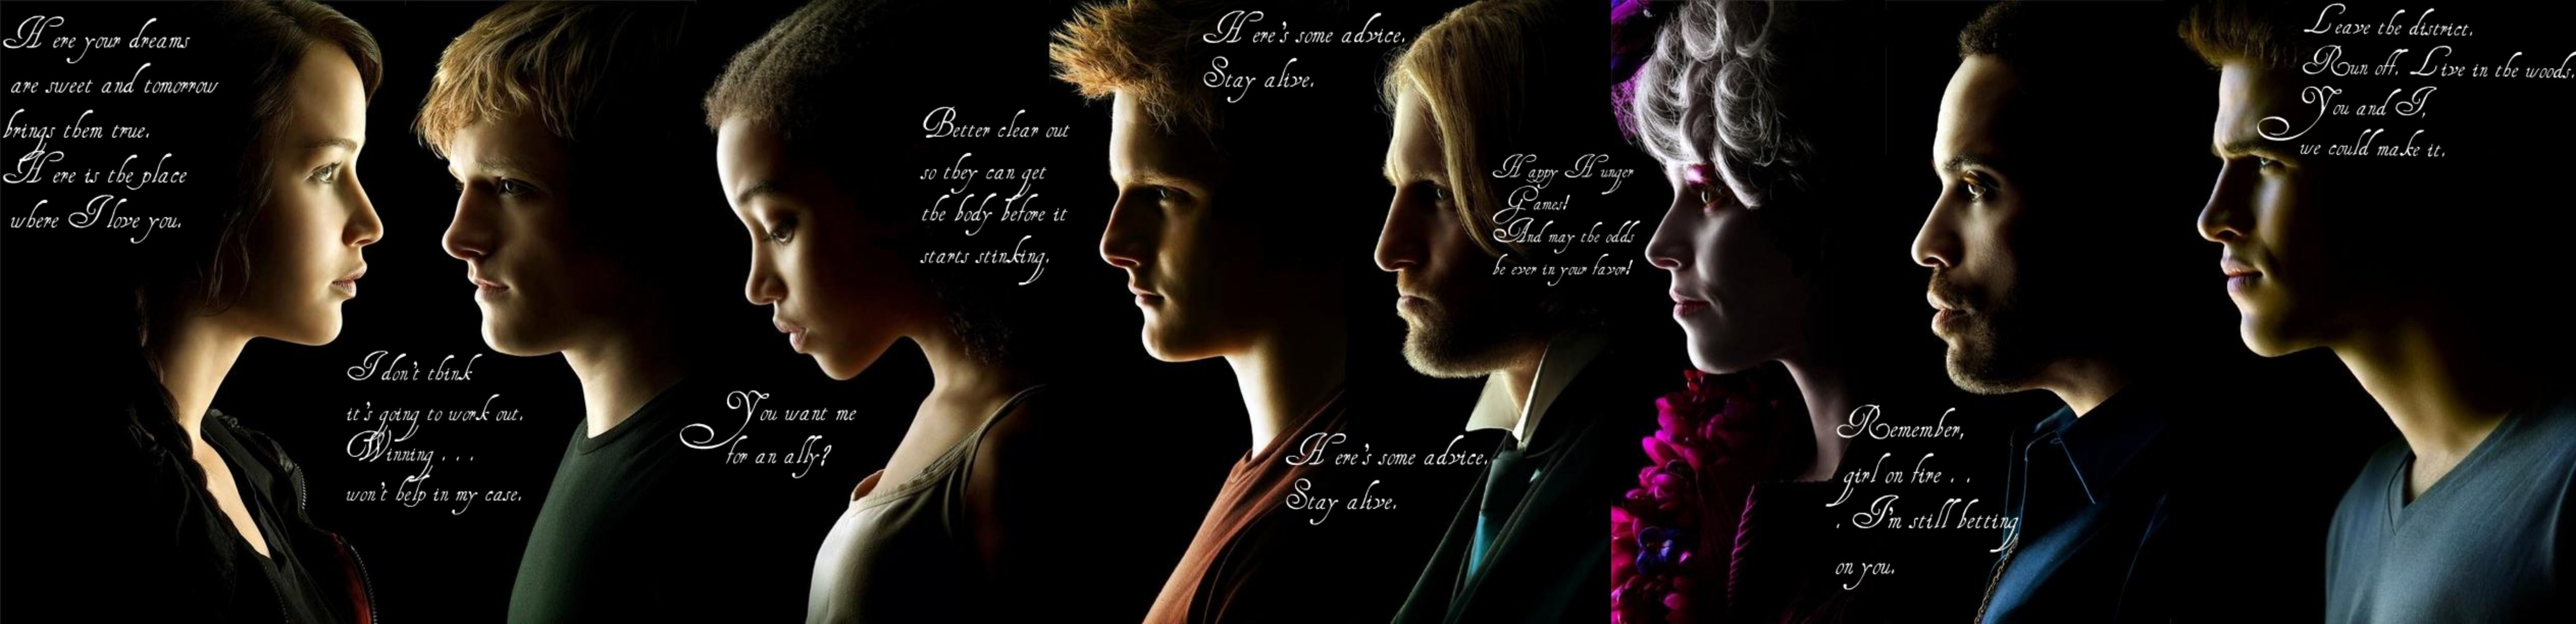 Cato Hunger Games Quotes. QuotesGram